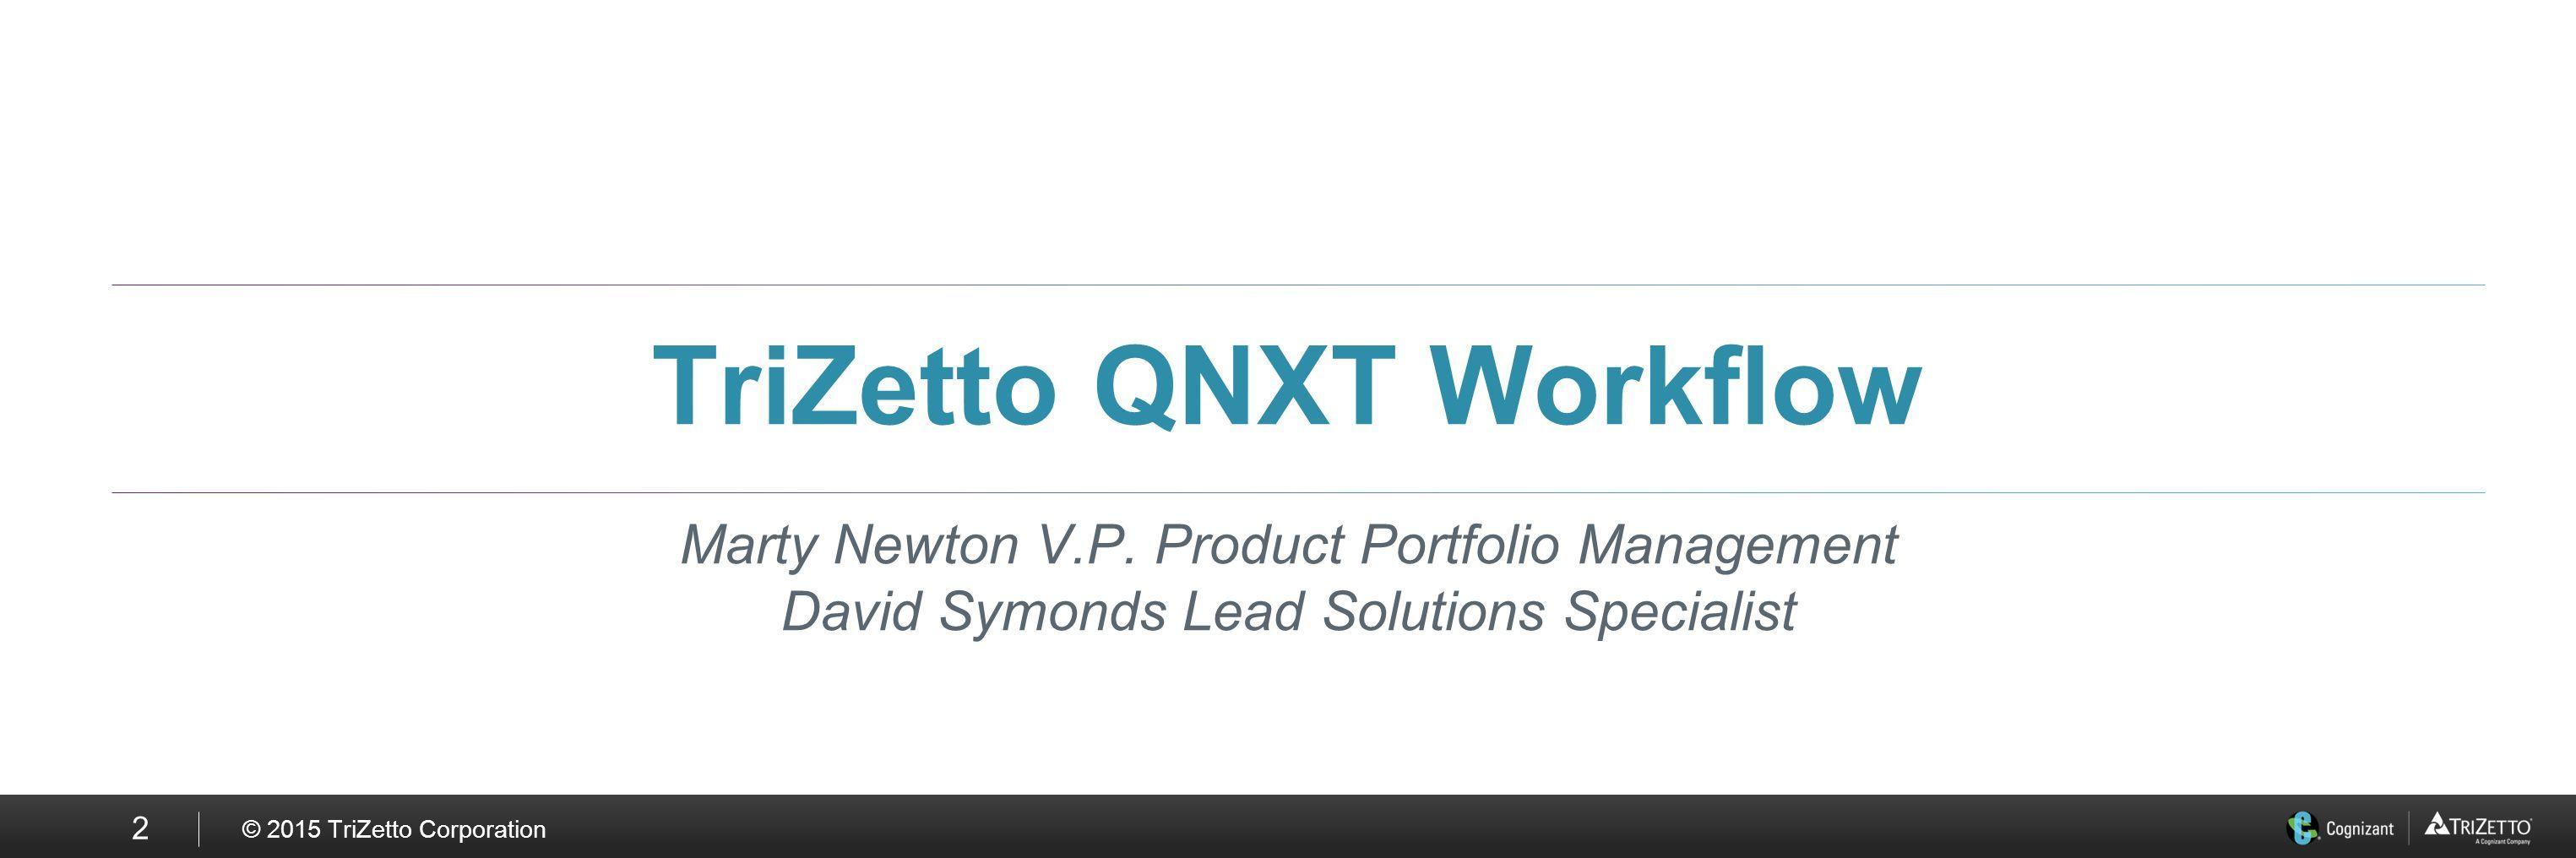 Qnxt Logo - TriZetto QNXT Workflow video online download